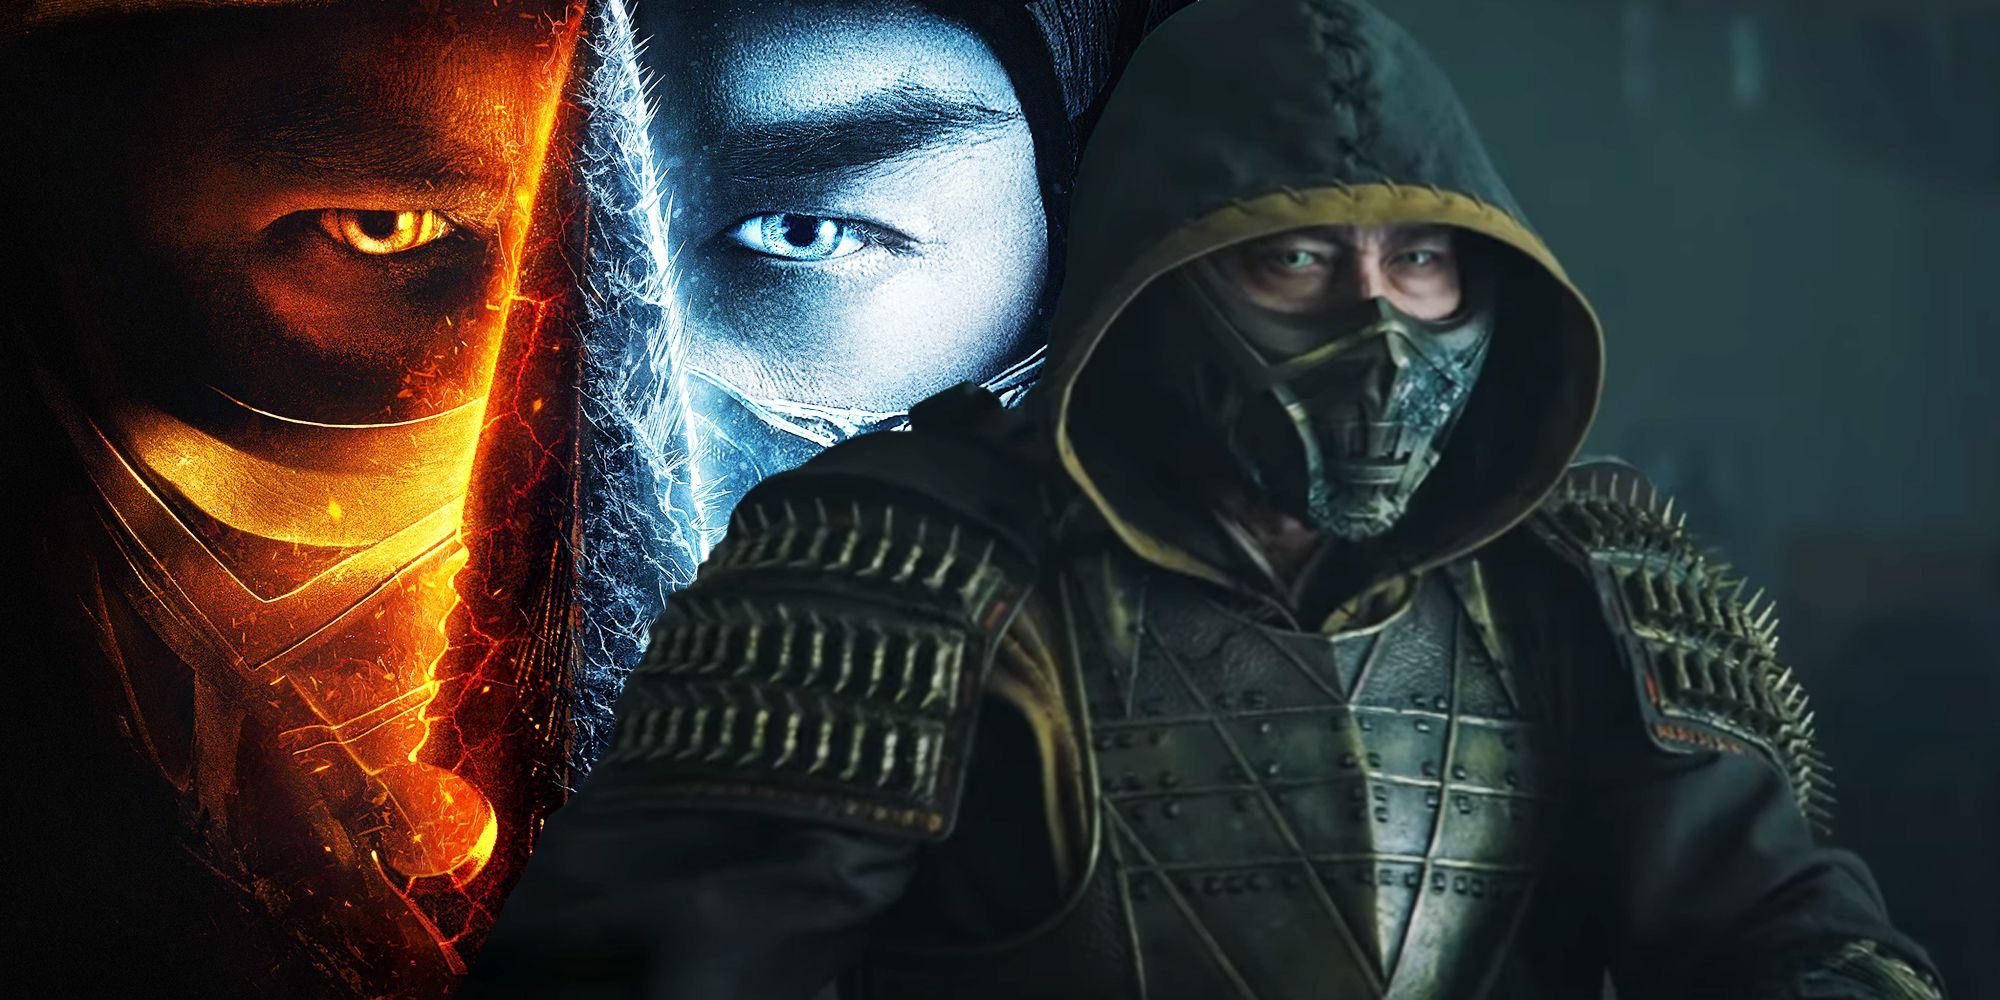 The poster for Mortal Kombat (2021) with Scorpion and Sub-Zero and Hiroyuki Sanada as Scorpion